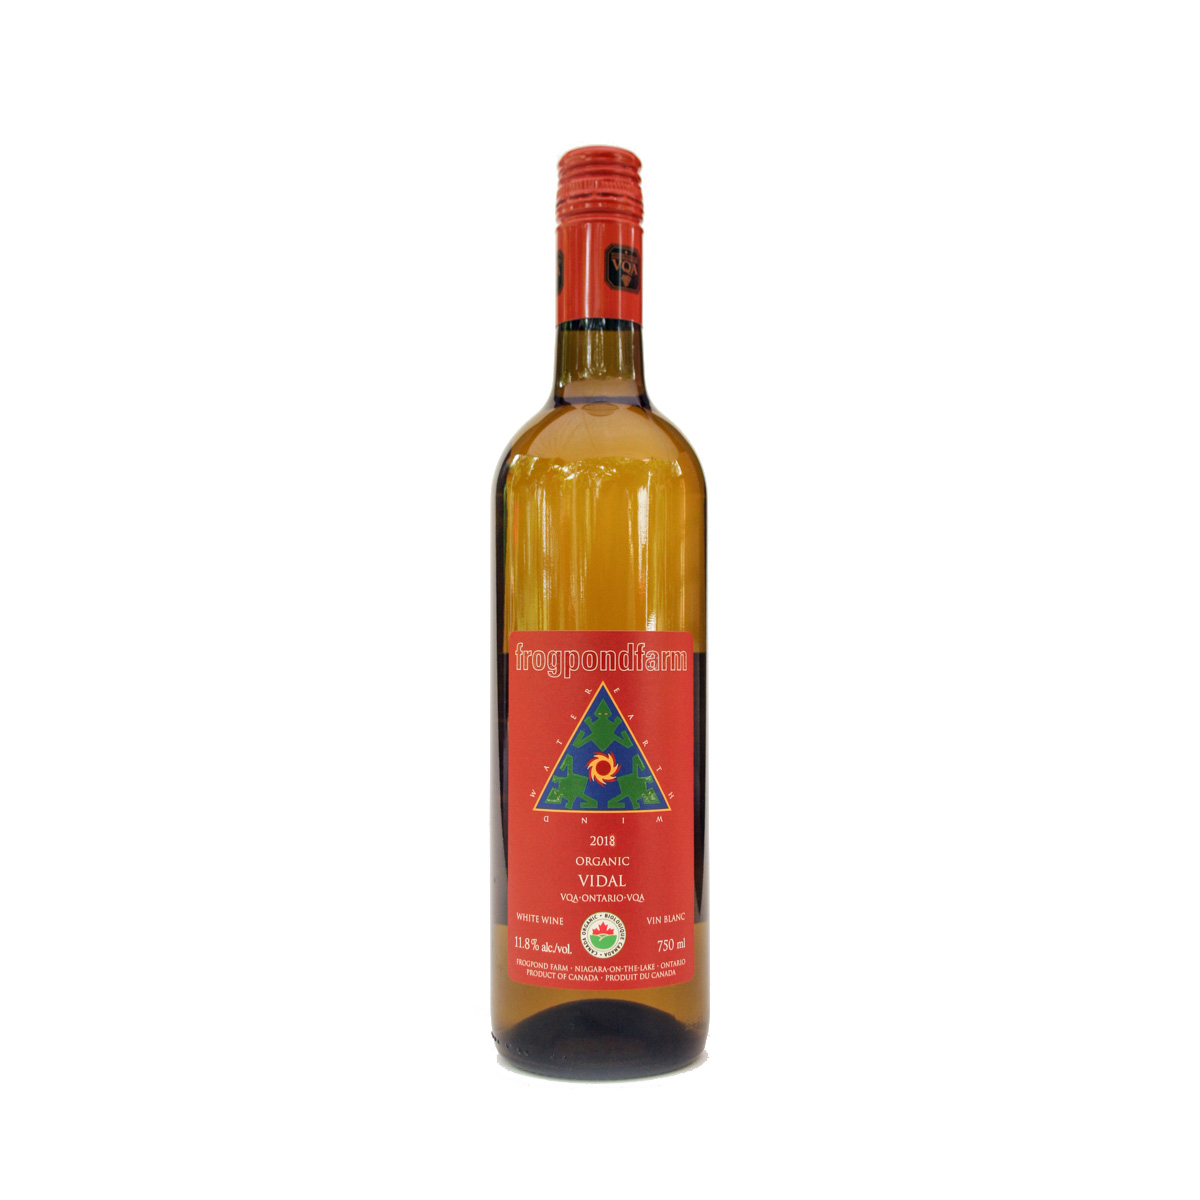 Frogpond Farm | Single bottle of Frogpond Farm certified organic 2018 Vidal wine on a white background.